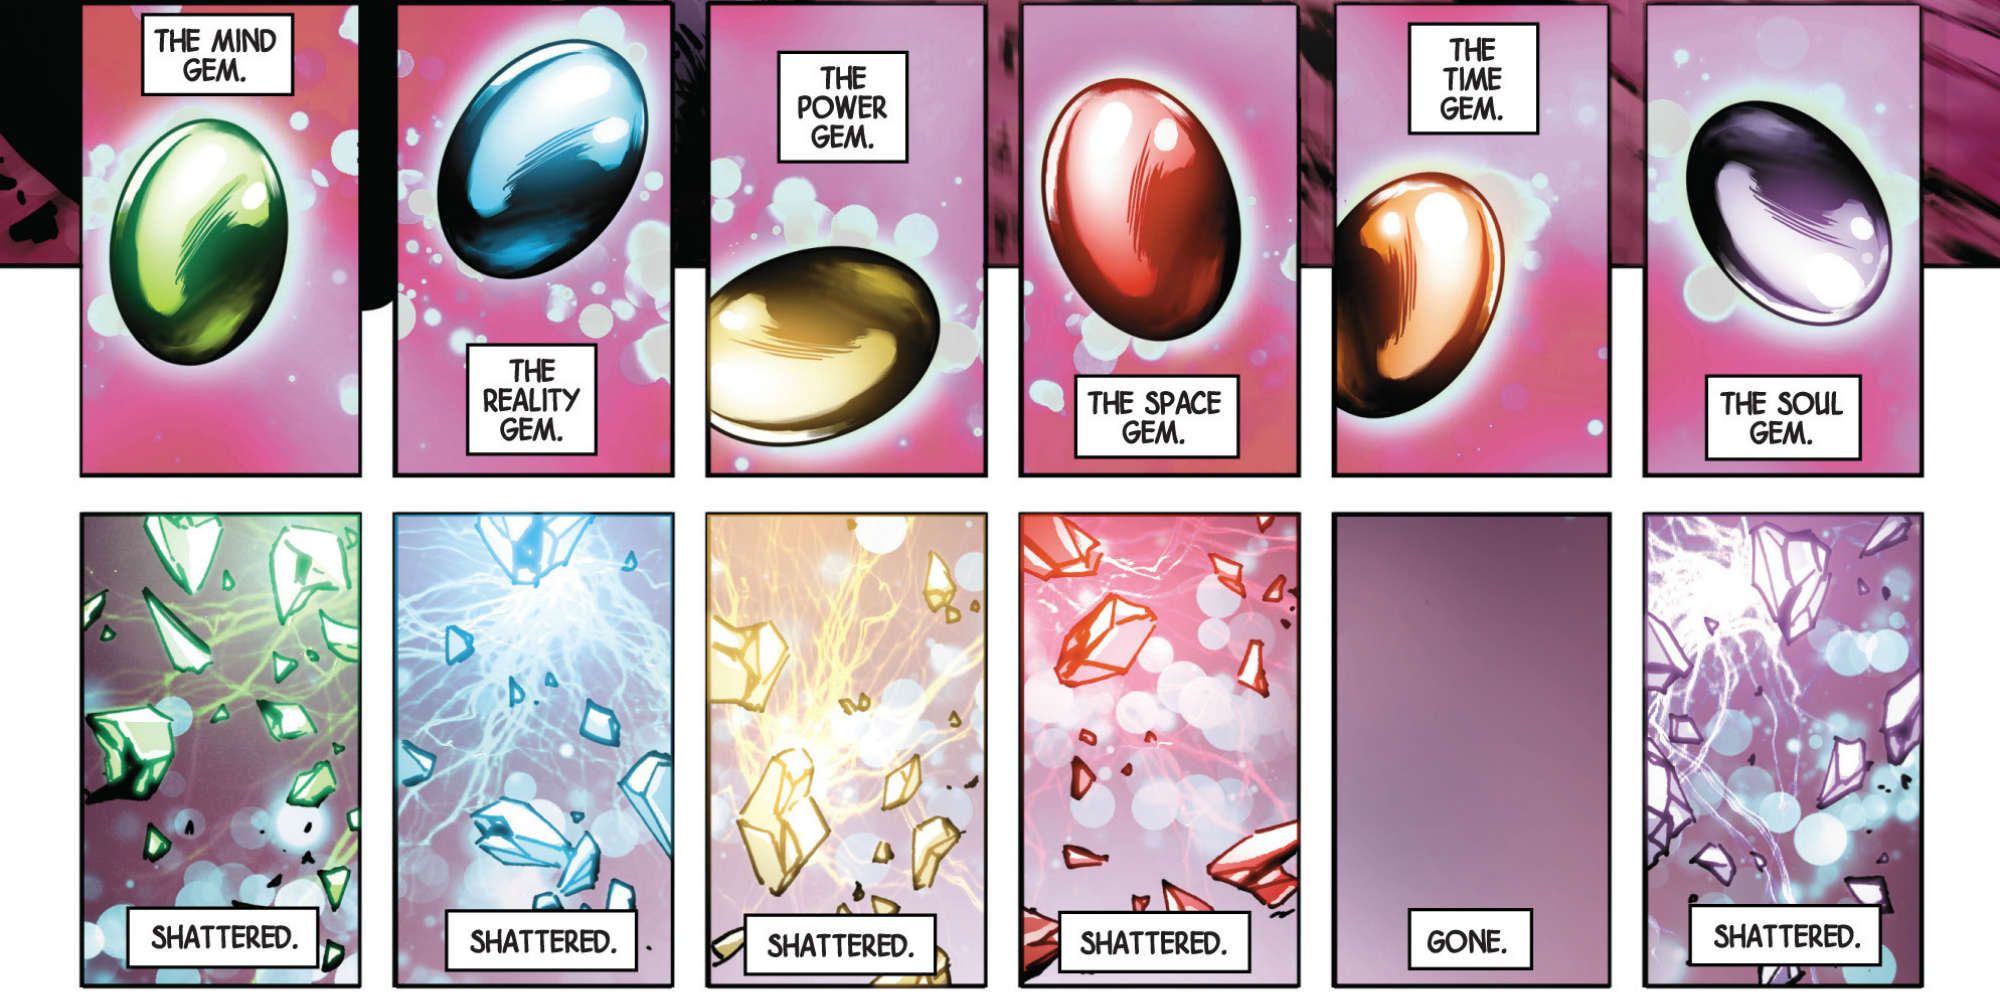 all five infinity stones